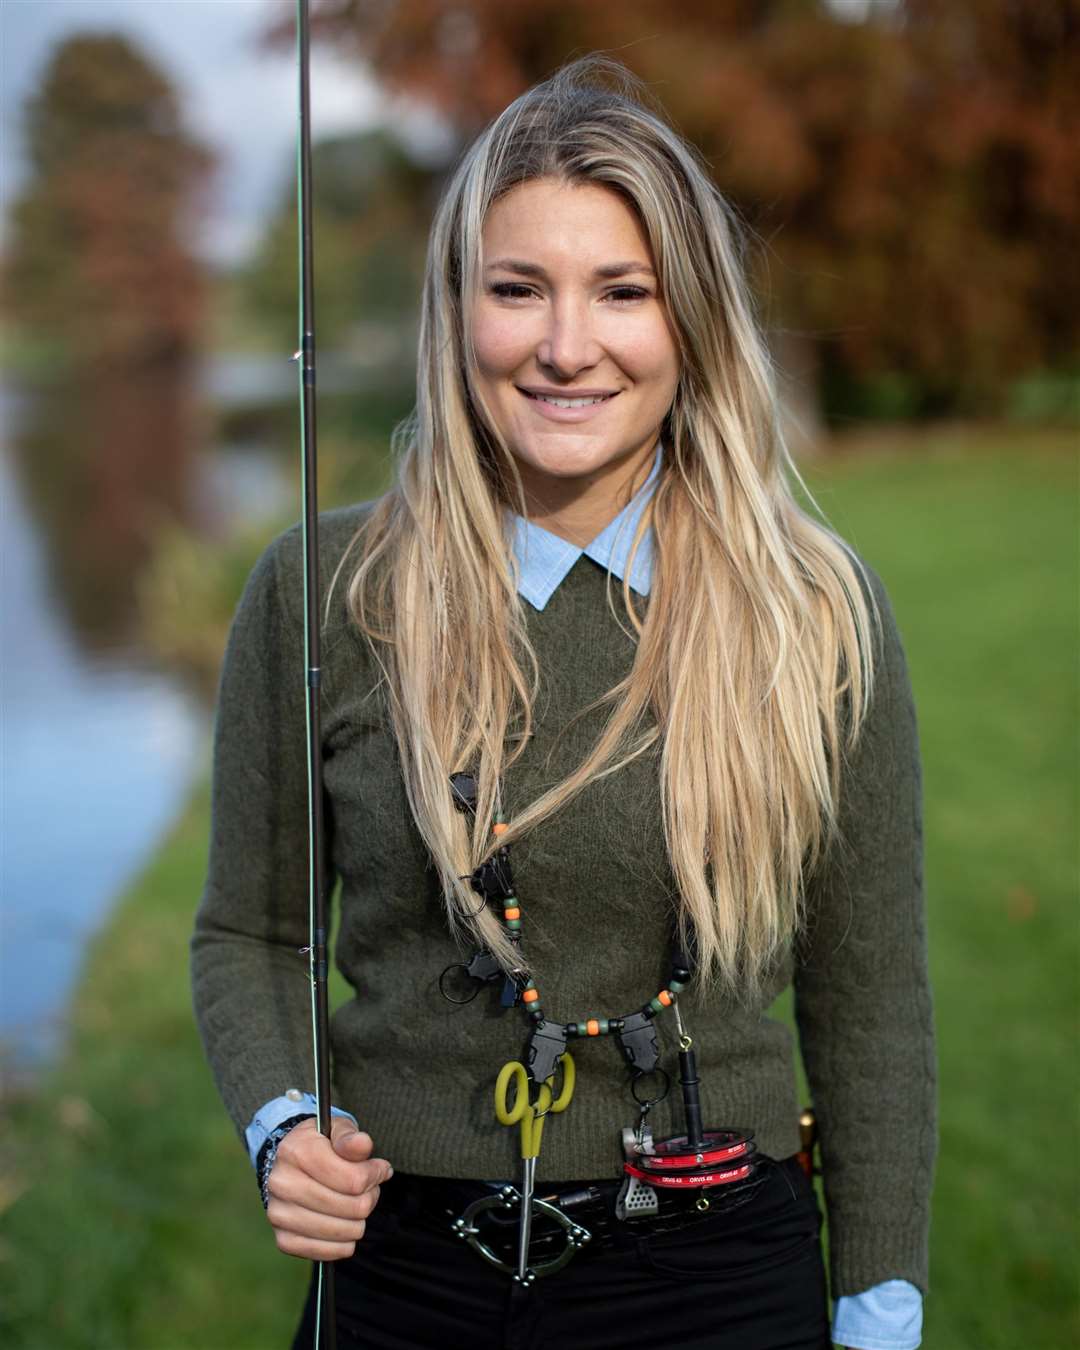 Online angling star Marina Gibson will open the River Deveron salmon season.